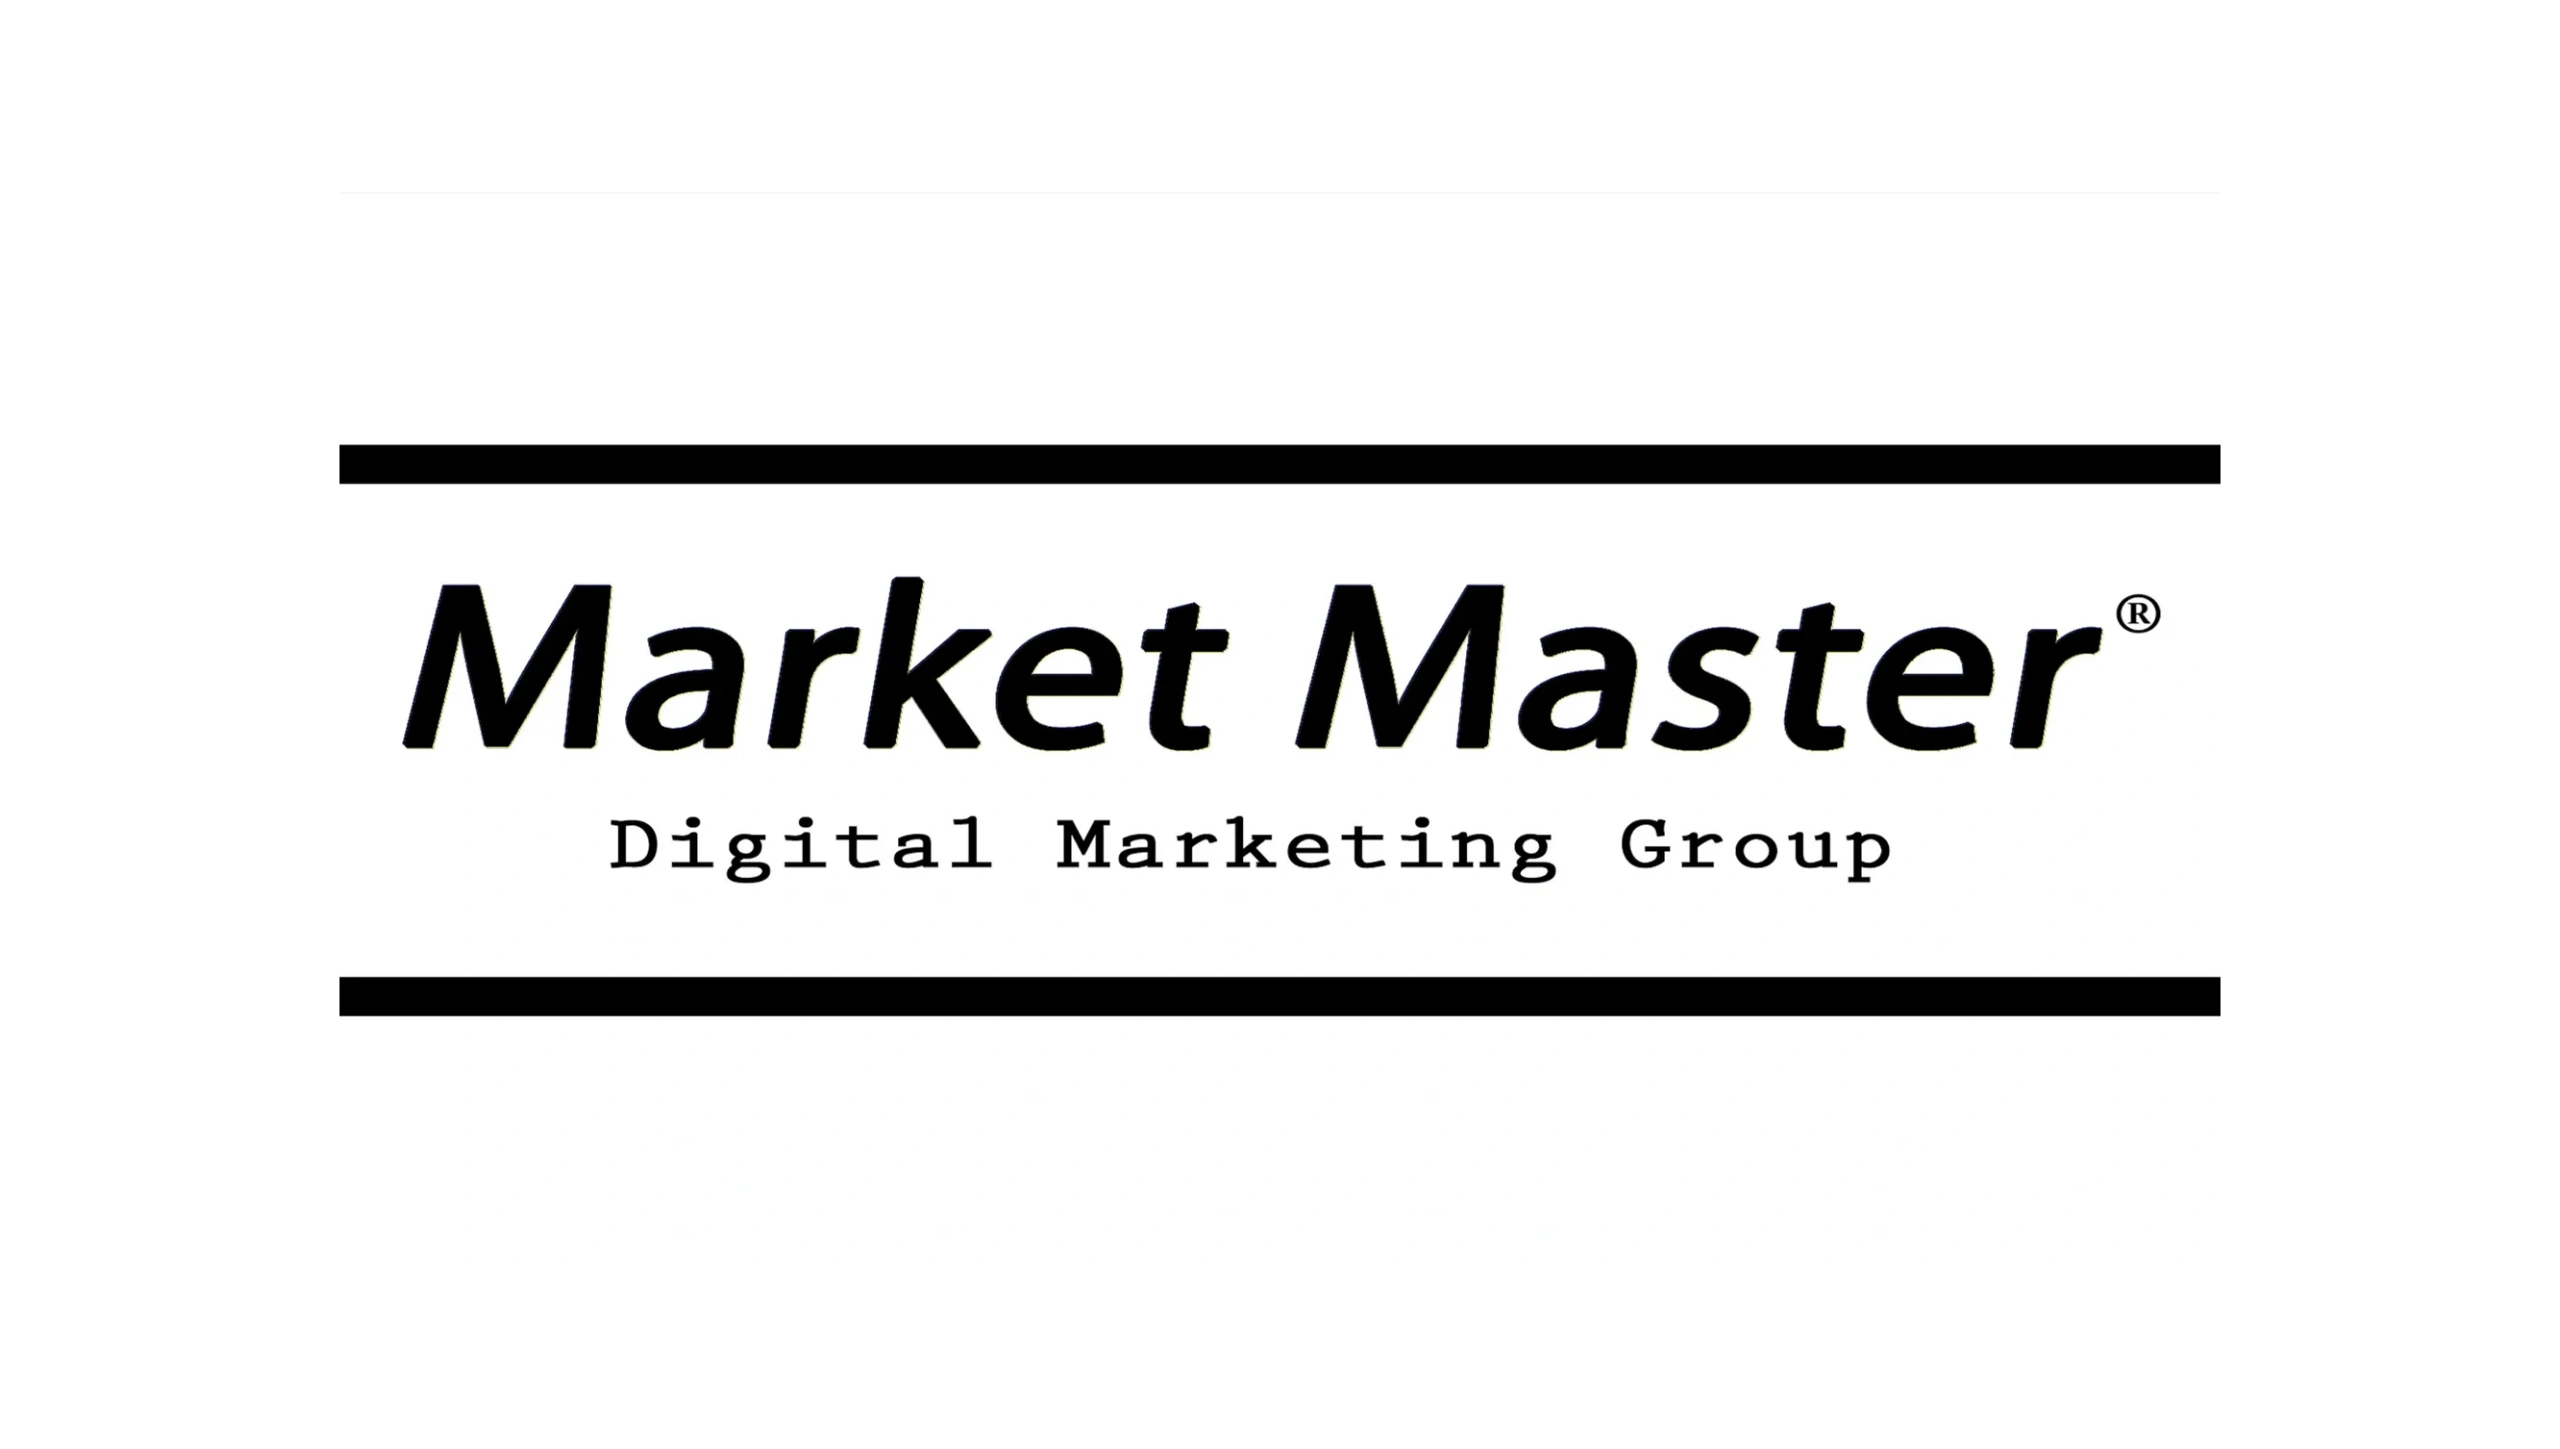 MarketMaster Digital Marketing, Lead Generation, Advertising, Web Design, SEO, Branding & AI Tools